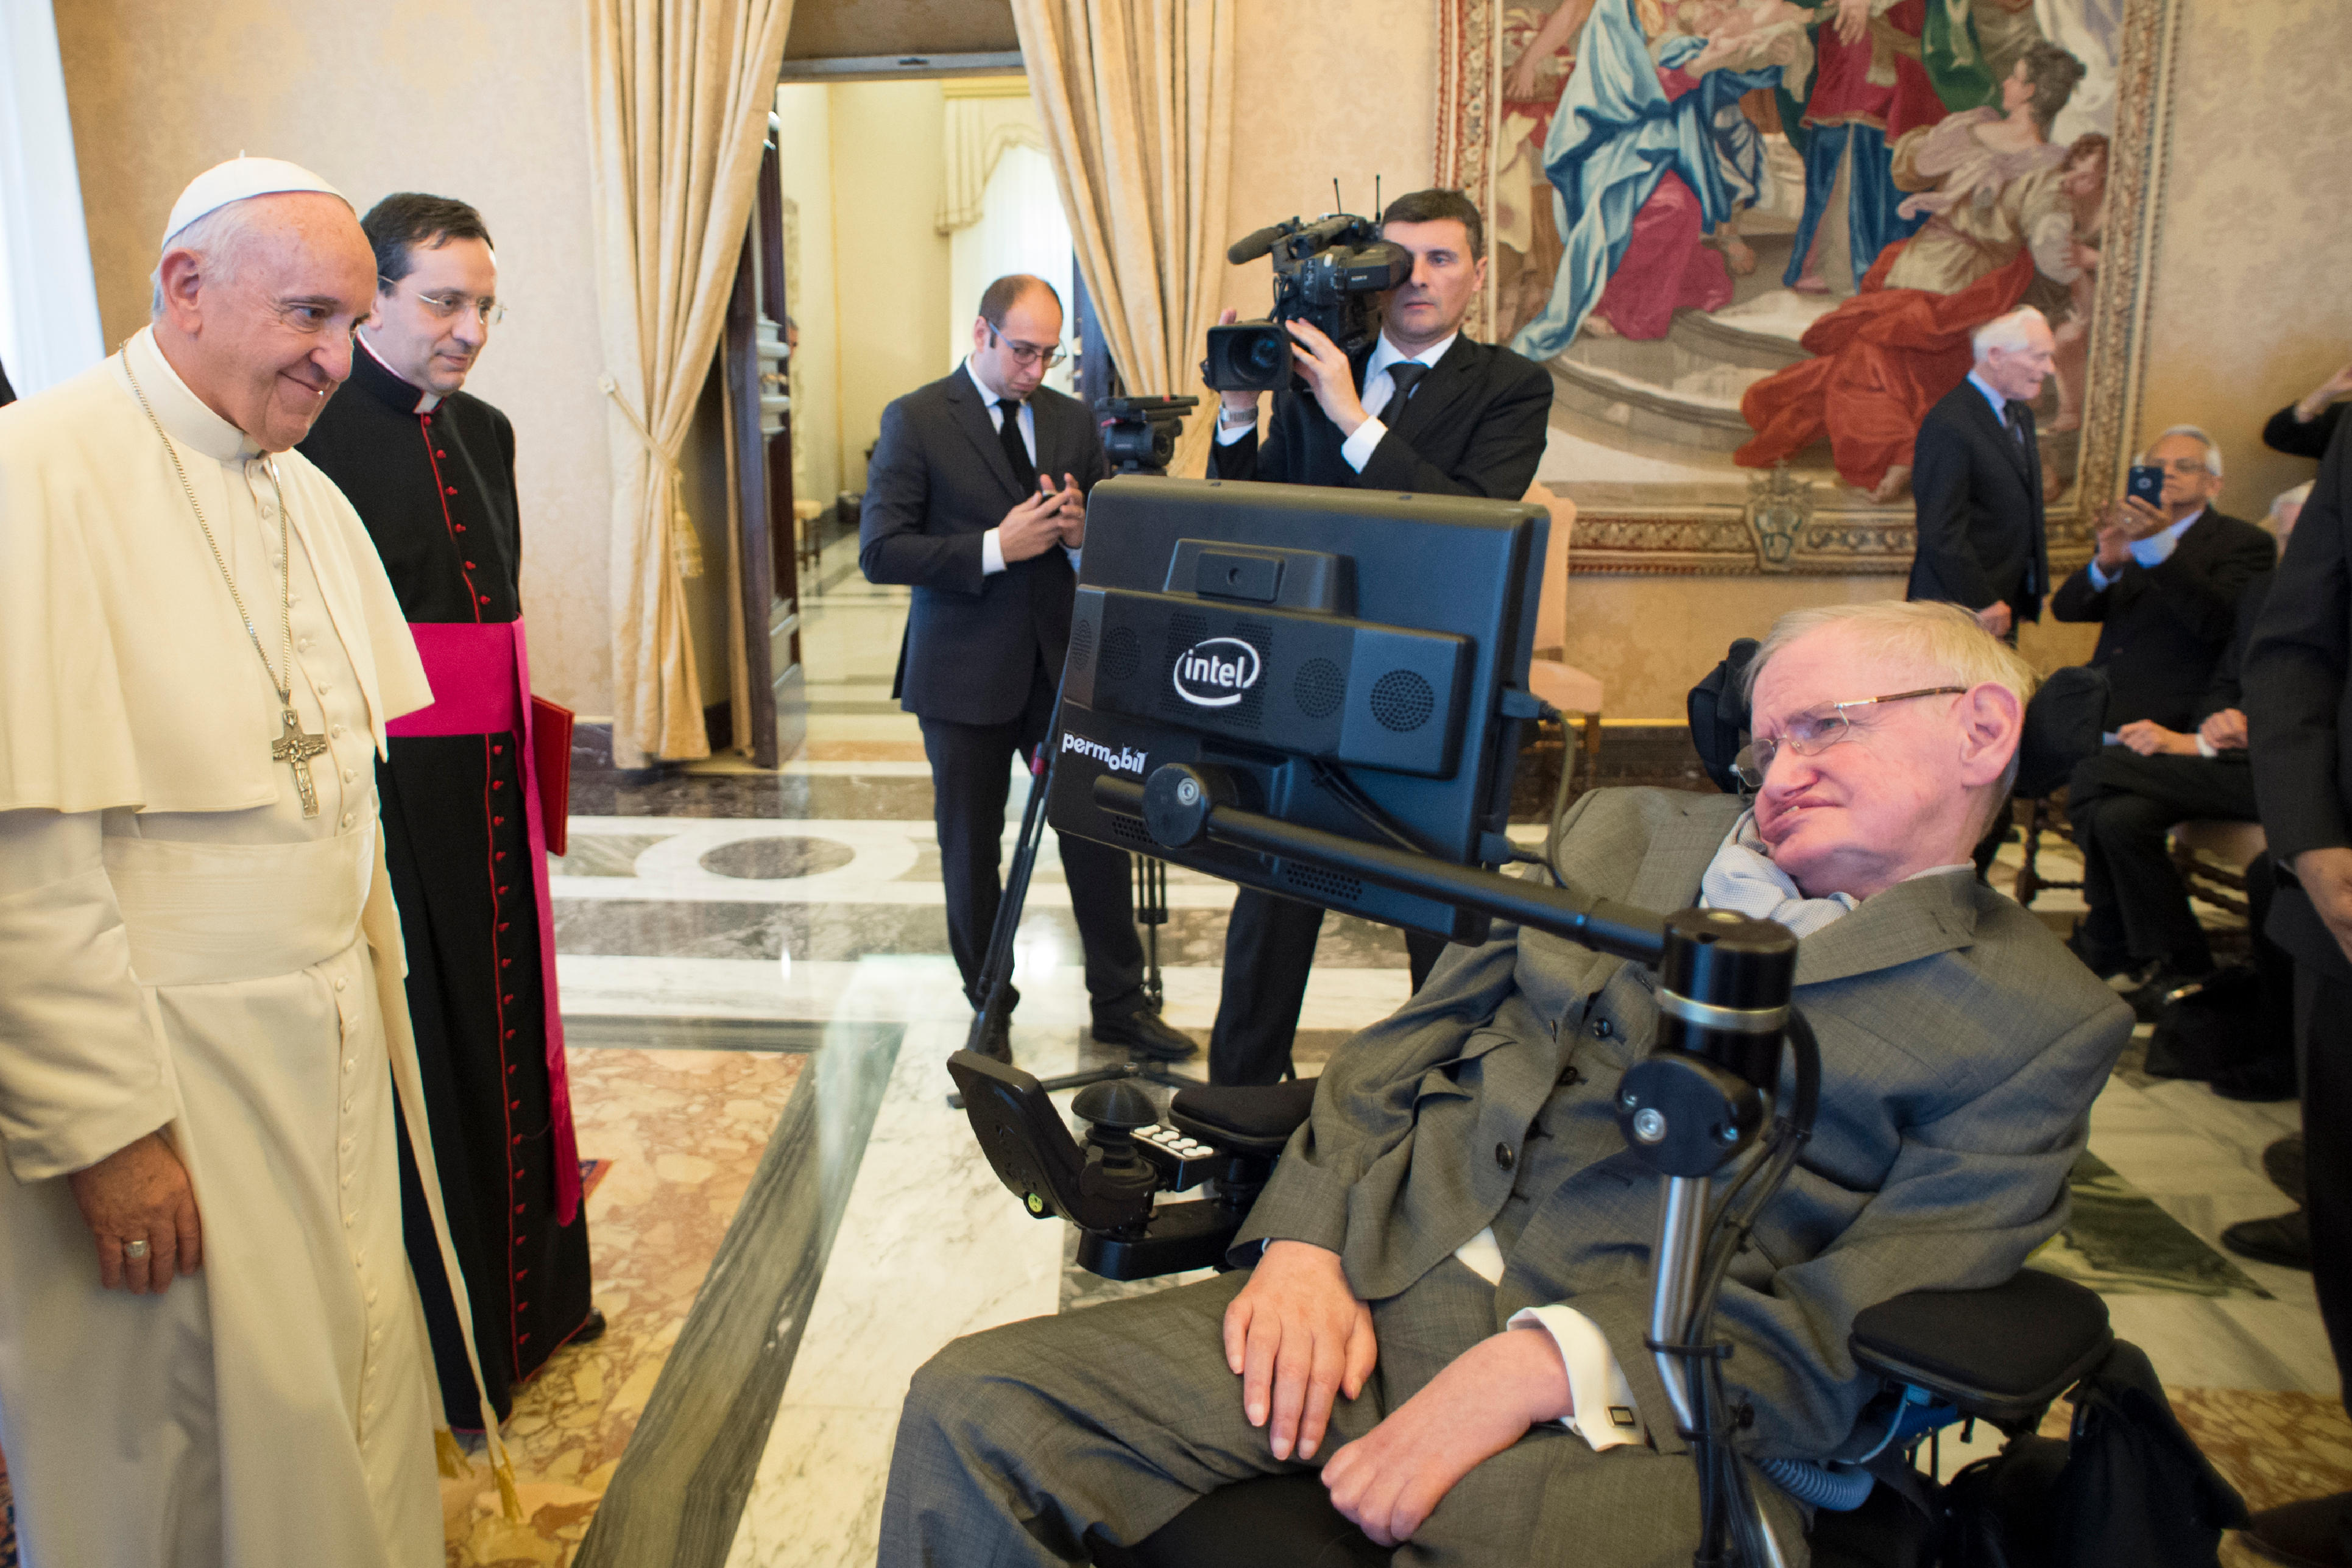 Church leaders praise Stephen Hawking 